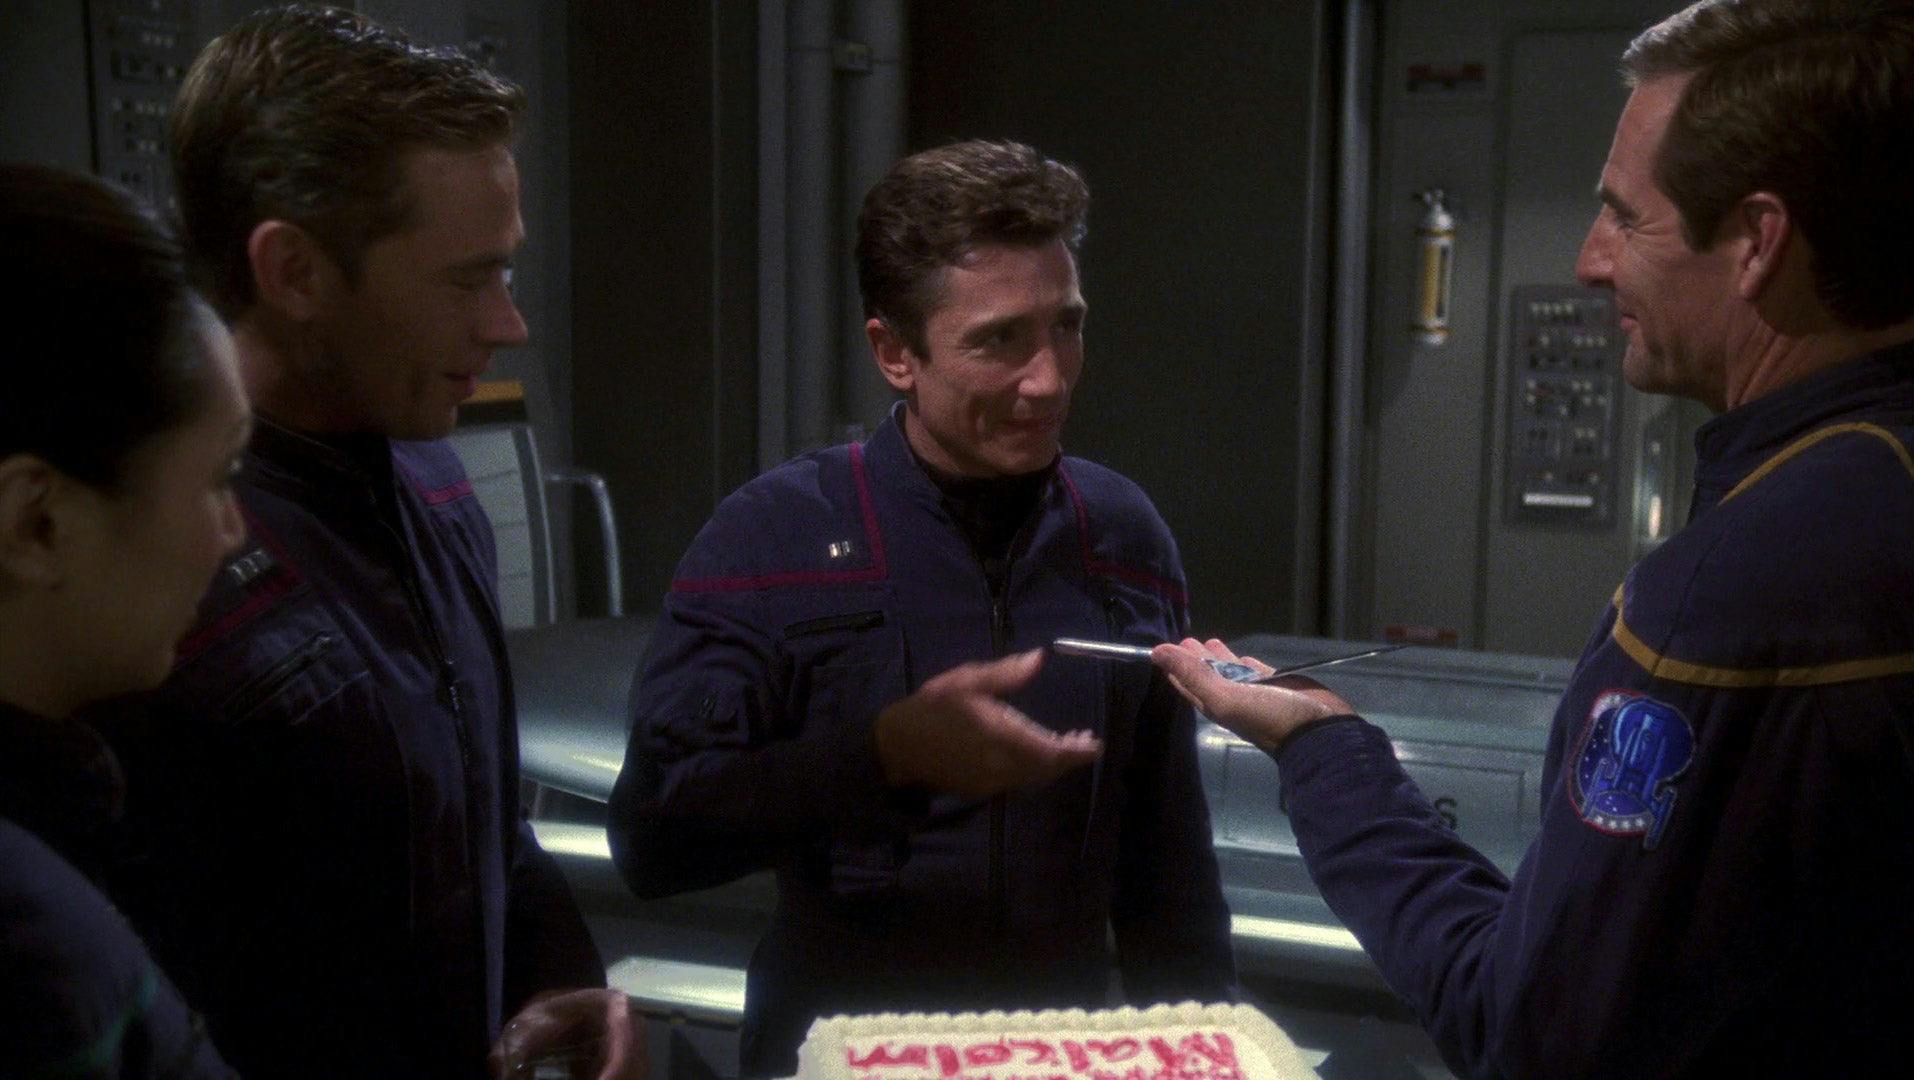 Star Trek: Enterprise - 'Silent Enemy' still of a smiling Archer handing Malcolm a cake serving knife